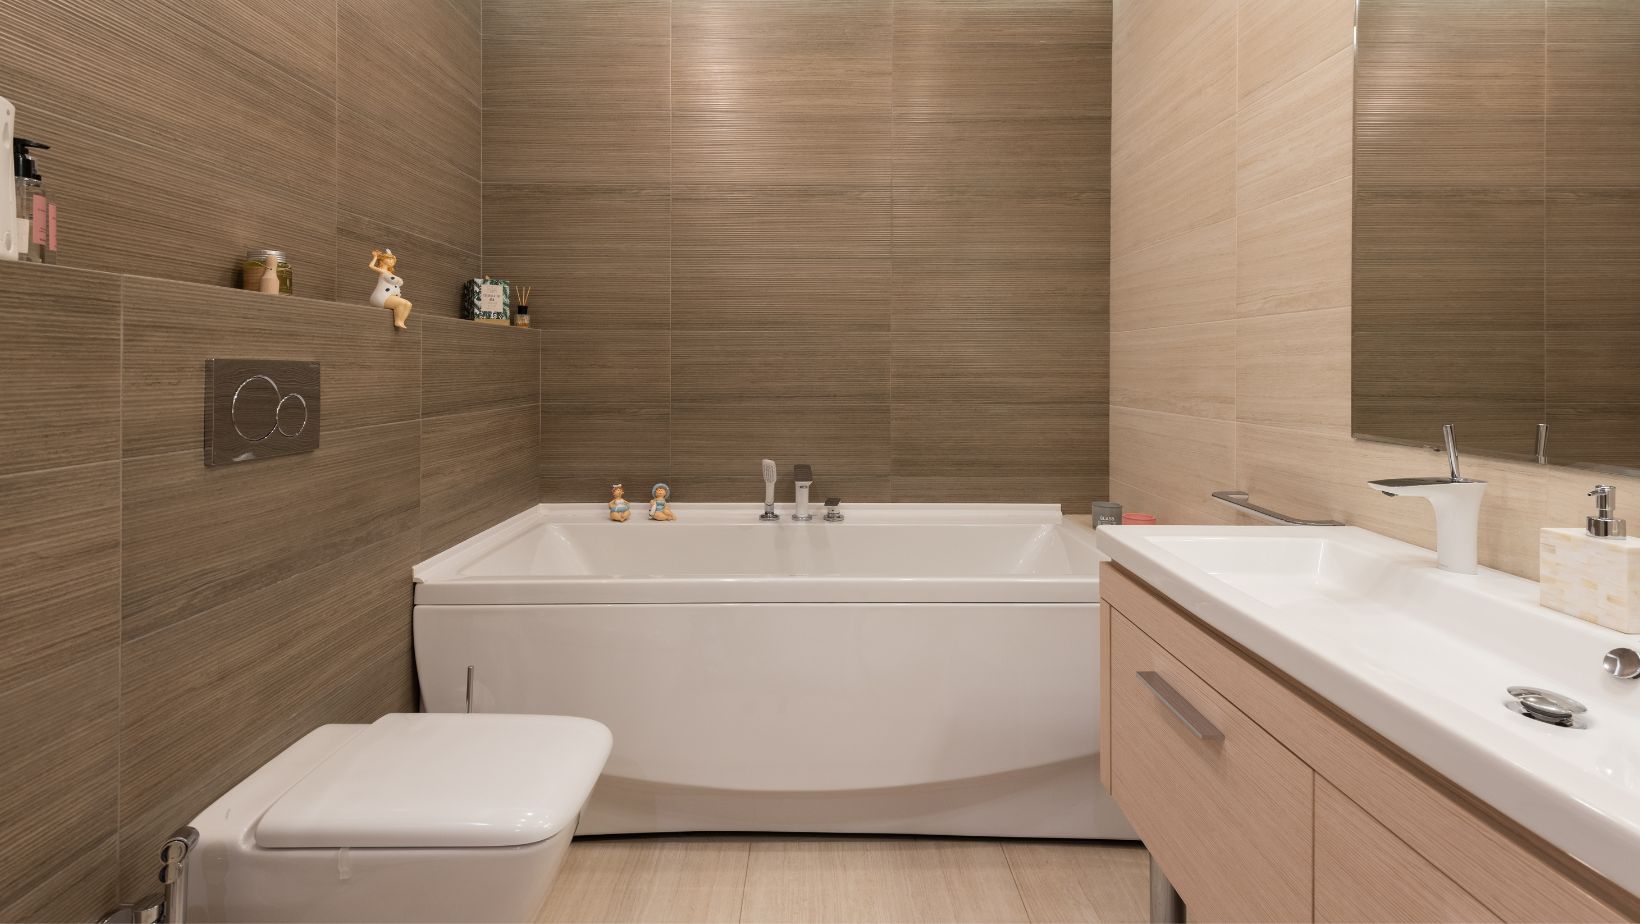 Modern bathroom style with cream bathroom cabinet, bath tub and toilet